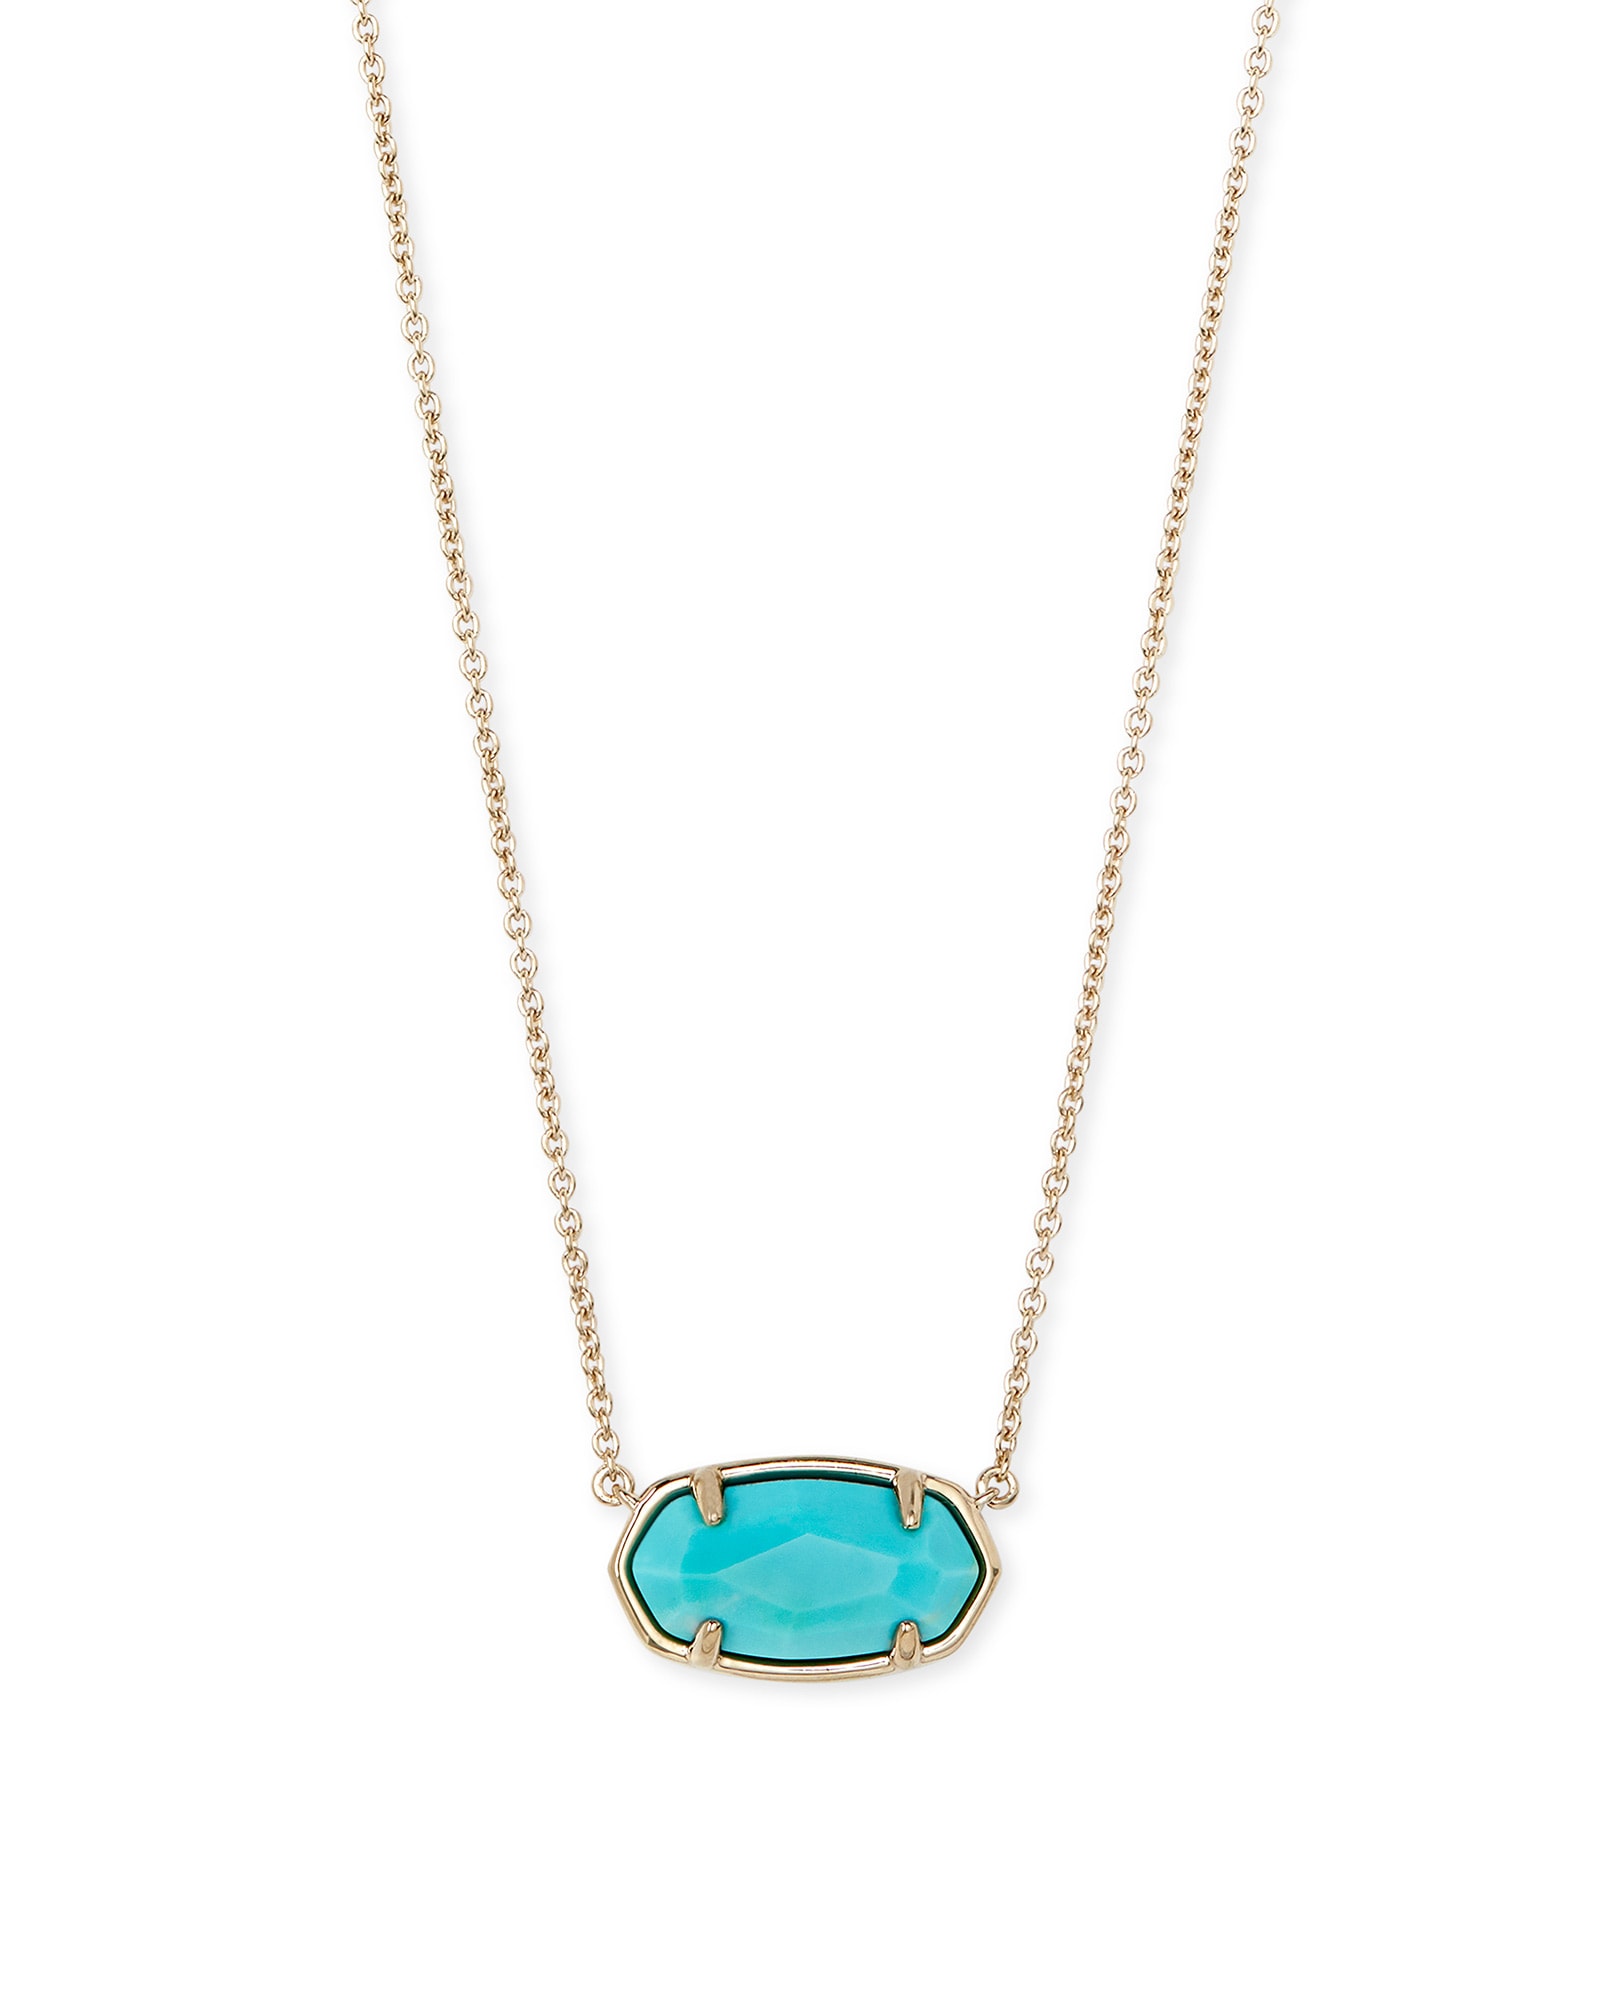 Kendra Scott Elisa 18k Gold Vermeil Pendant Necklace in Turquoise | Genuine Turquoise